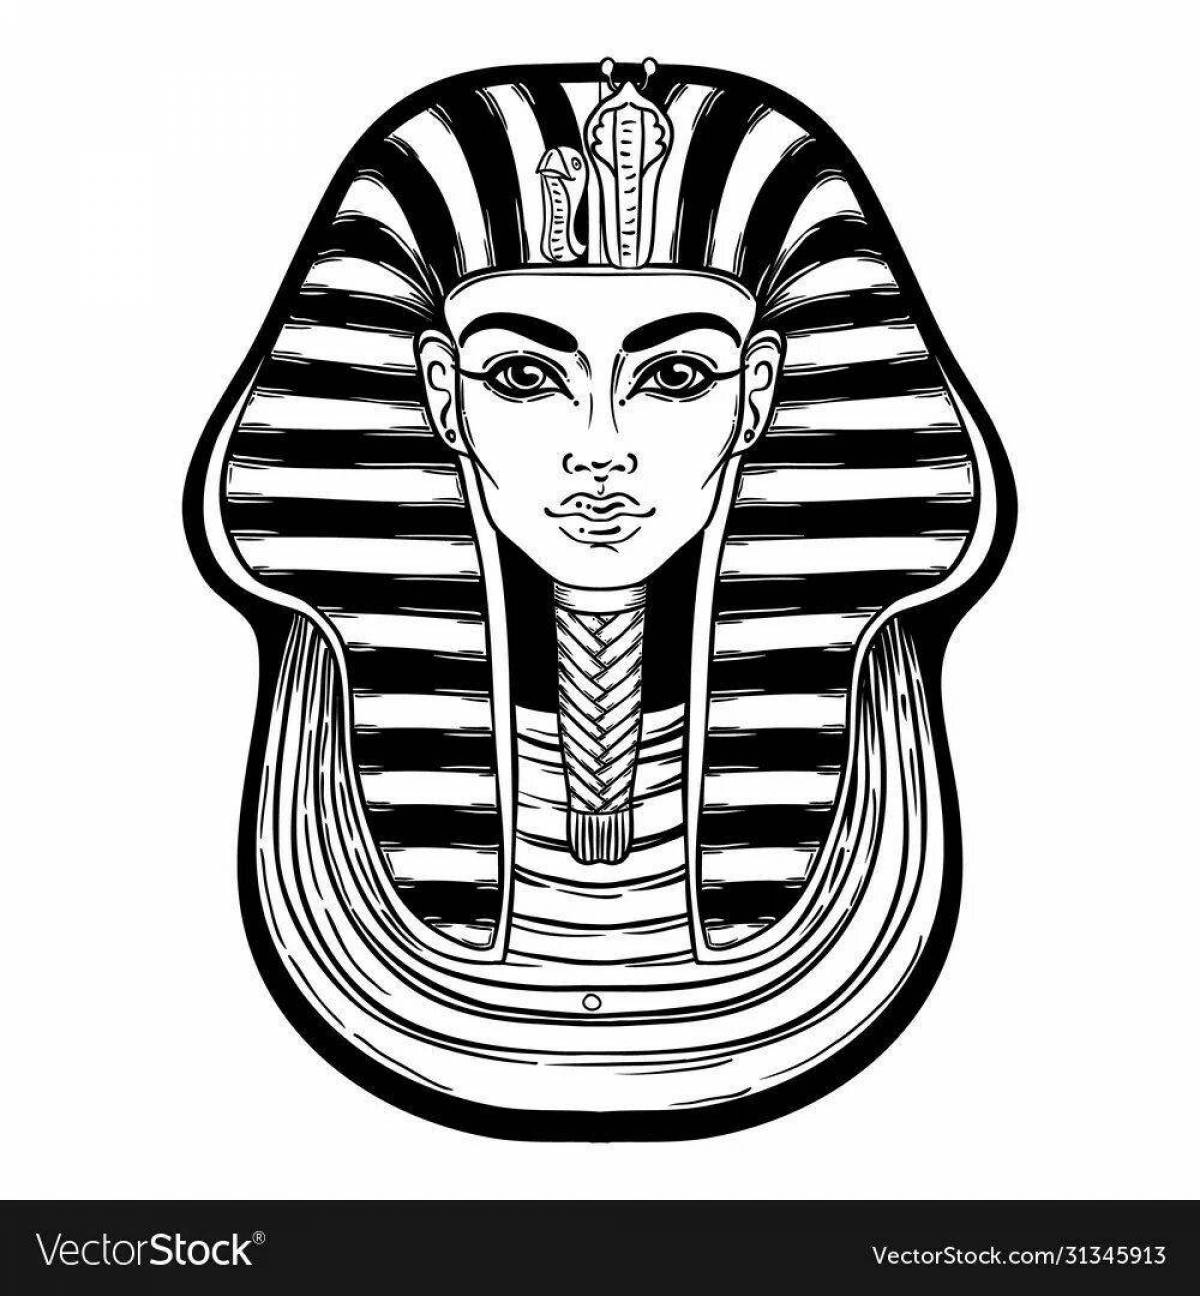 Раскраска величественная маска фараона тутанхамона